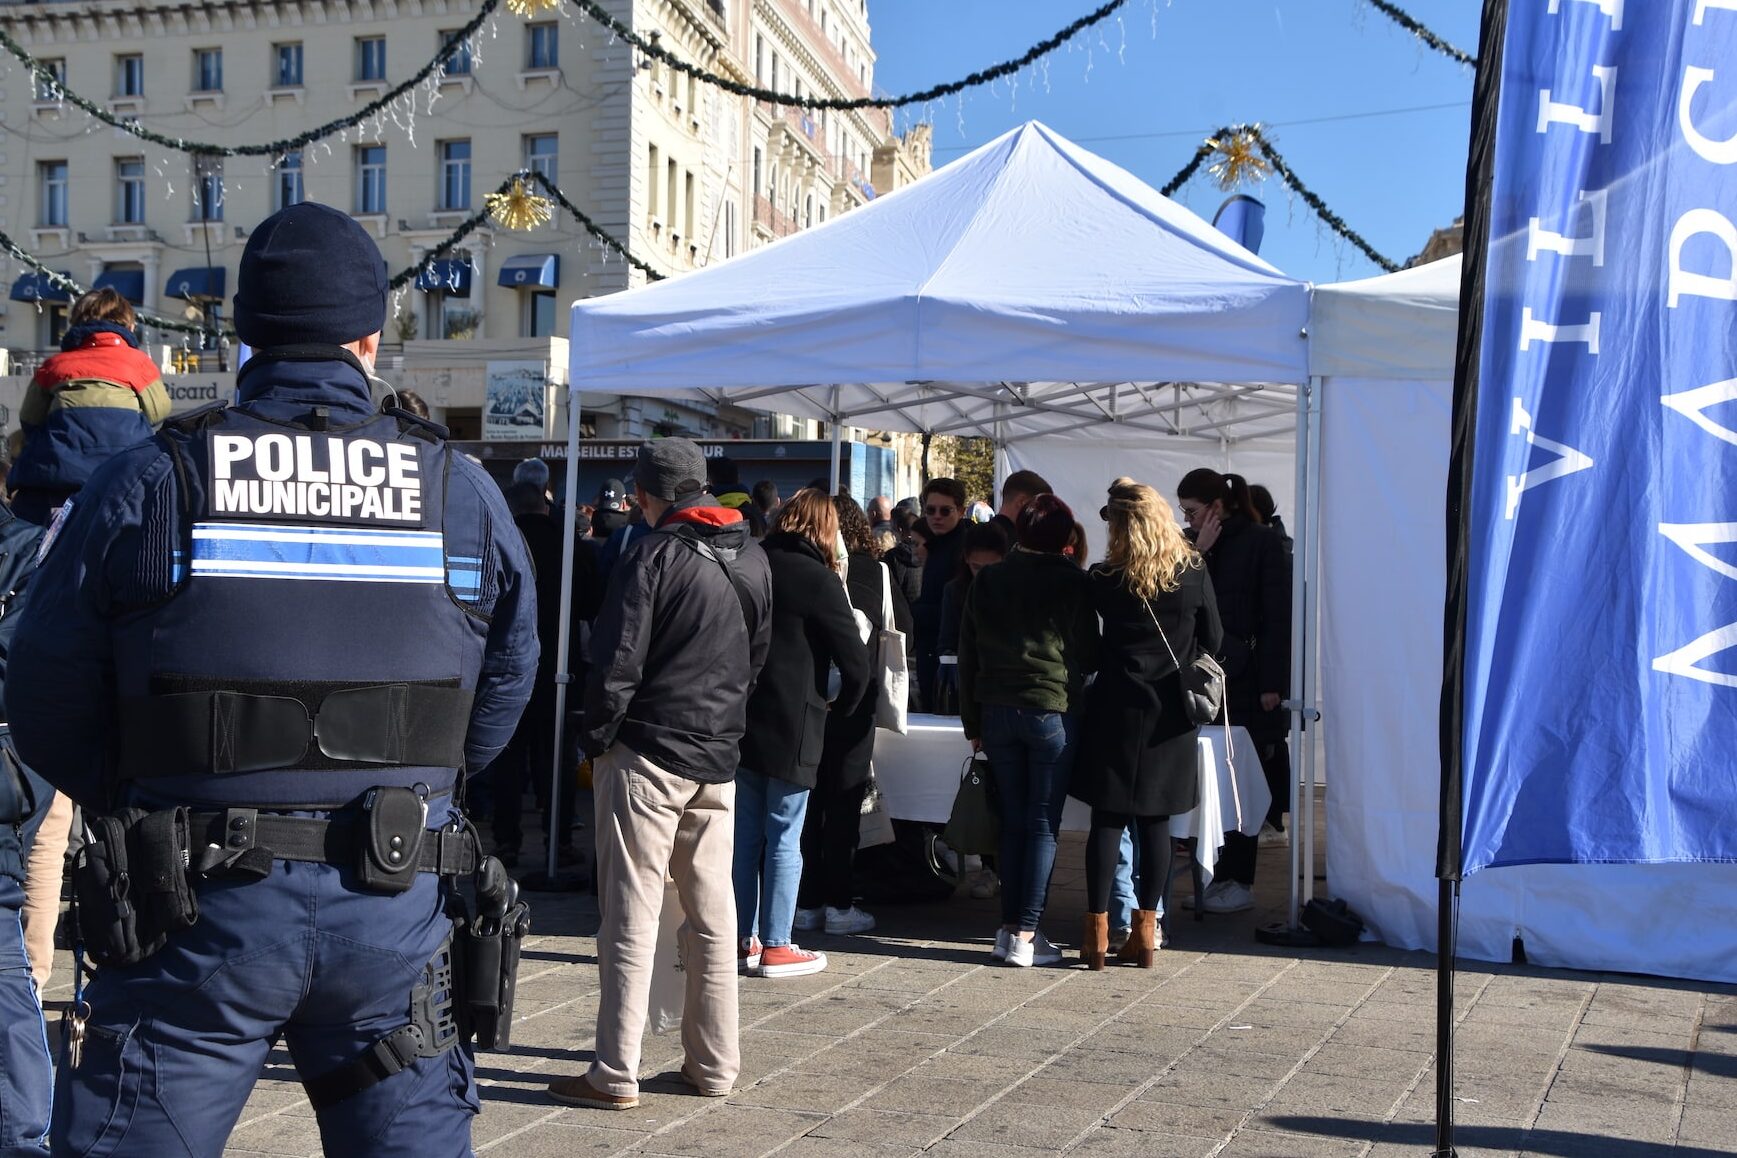 Marseille police, La Ville de Marseille va renforcer sa police municipale en vue des JO 2024, Made in Marseille